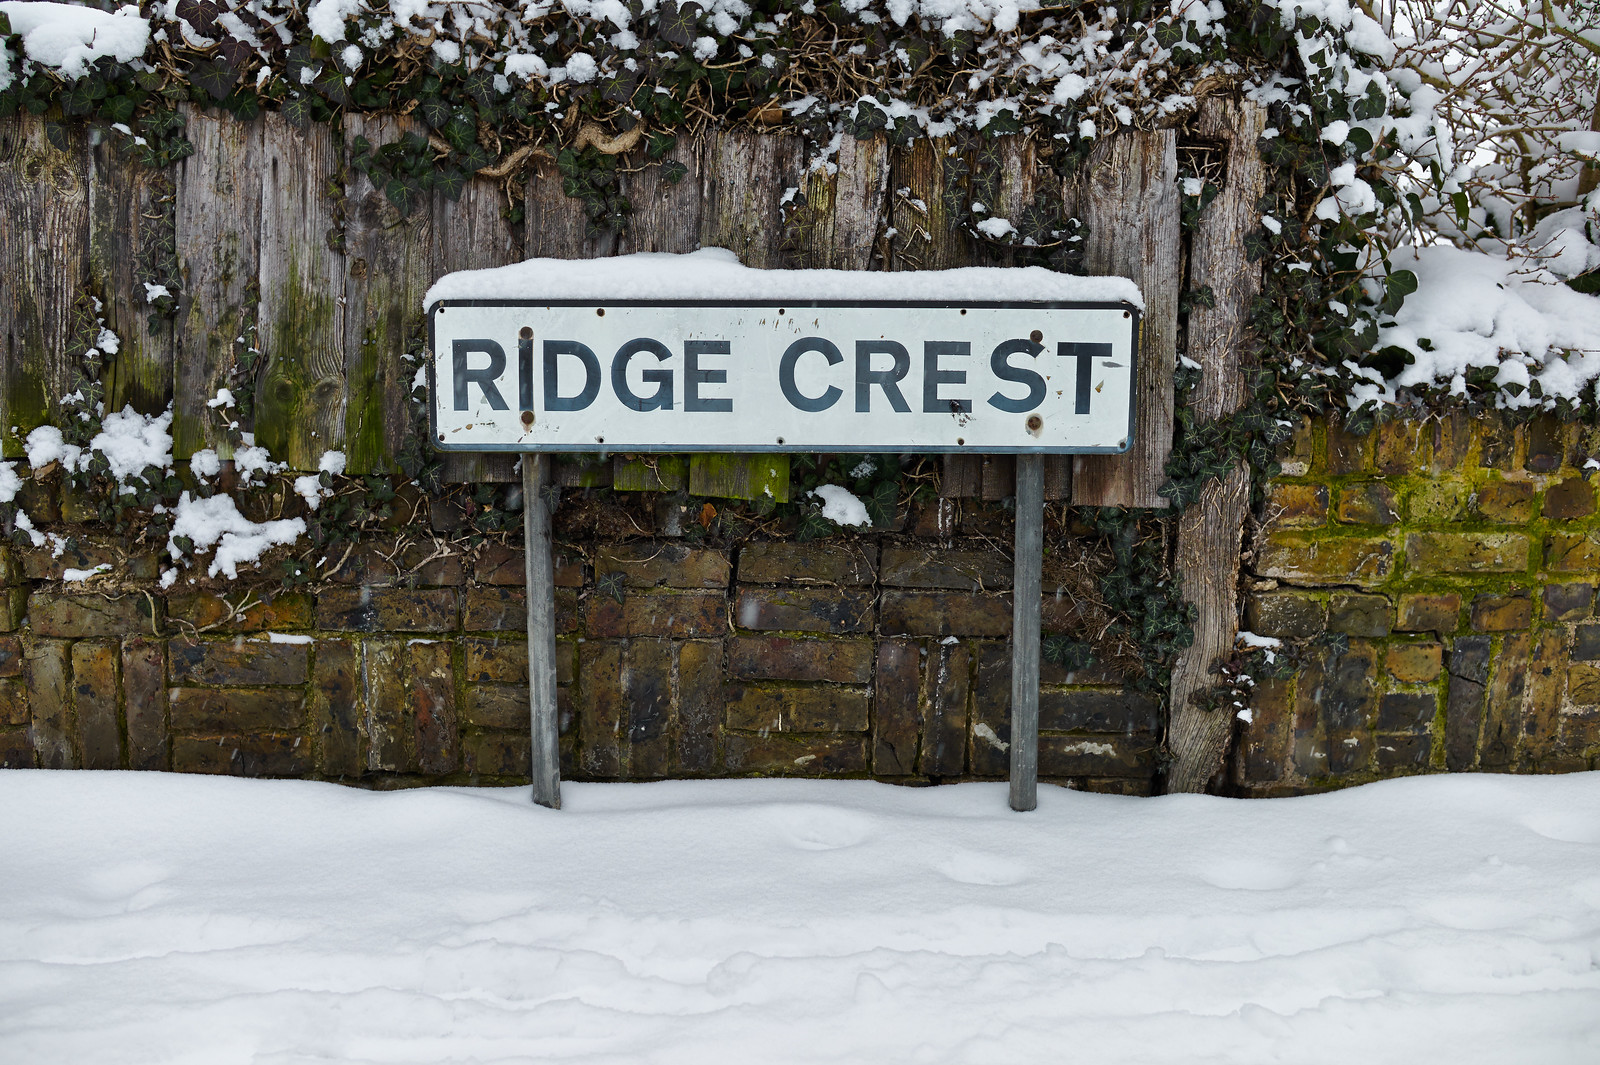 Snowy sign for Ridge Crest